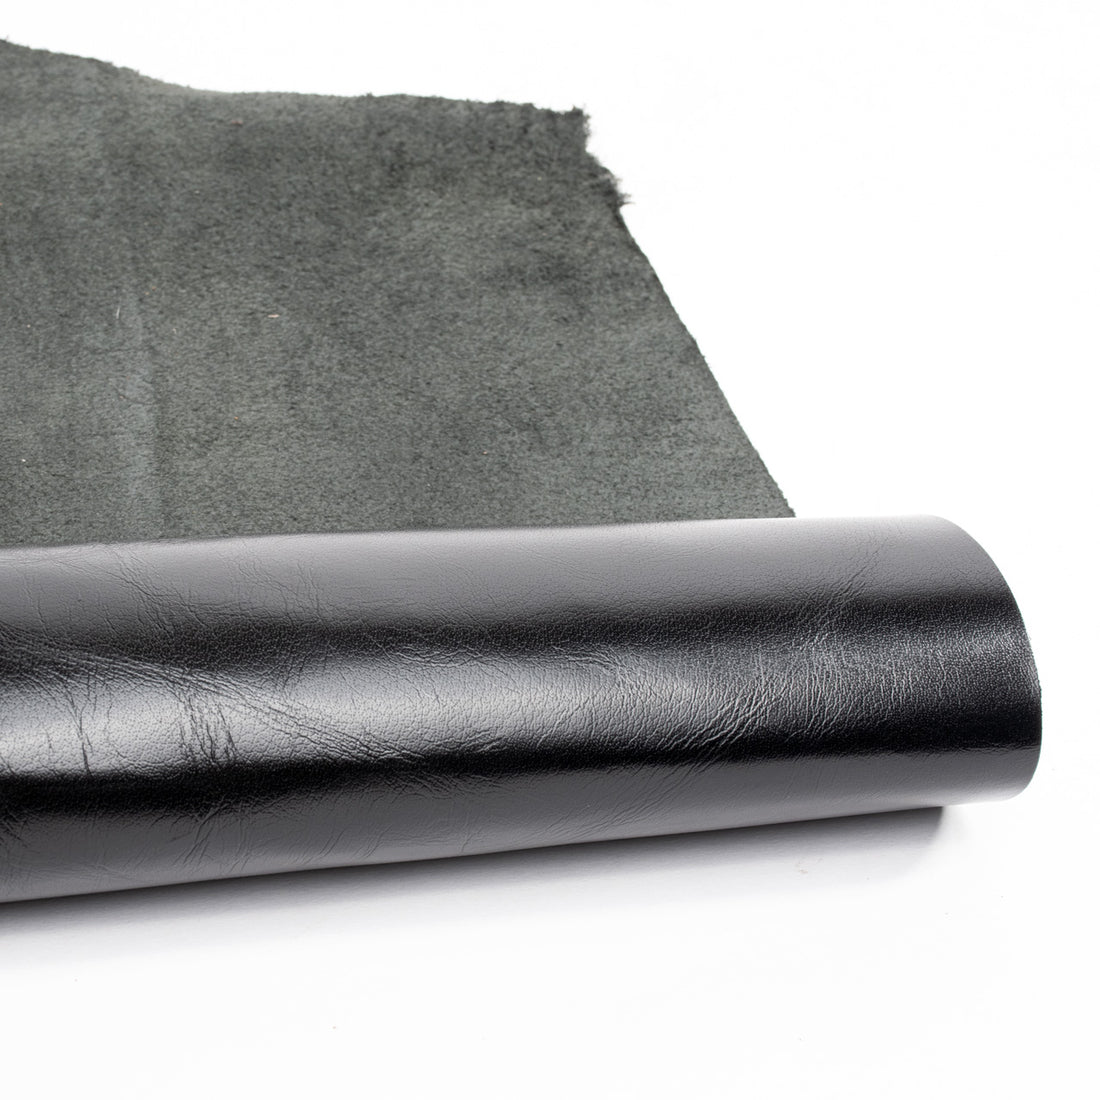 Black sheep smooth leather sheet - Pre cut